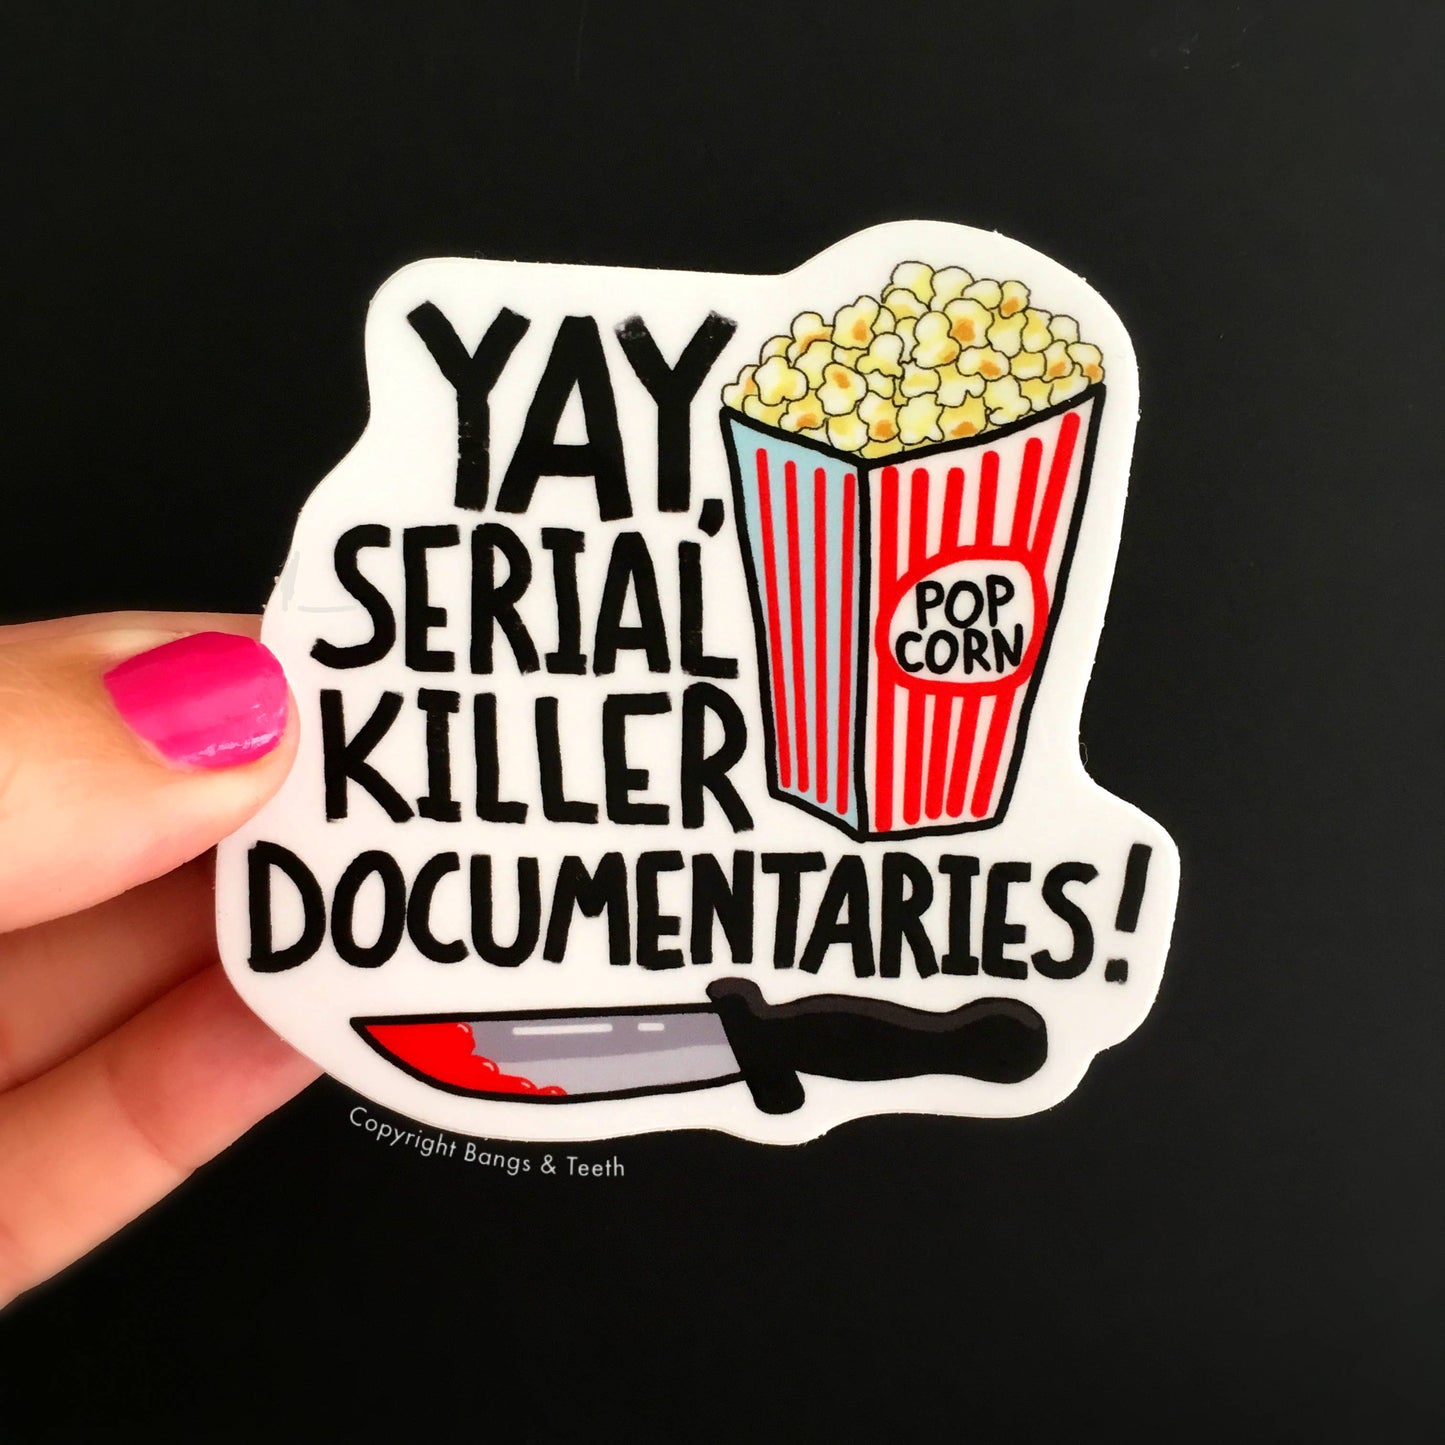 Yay, Serial Killer Documentaries sticker